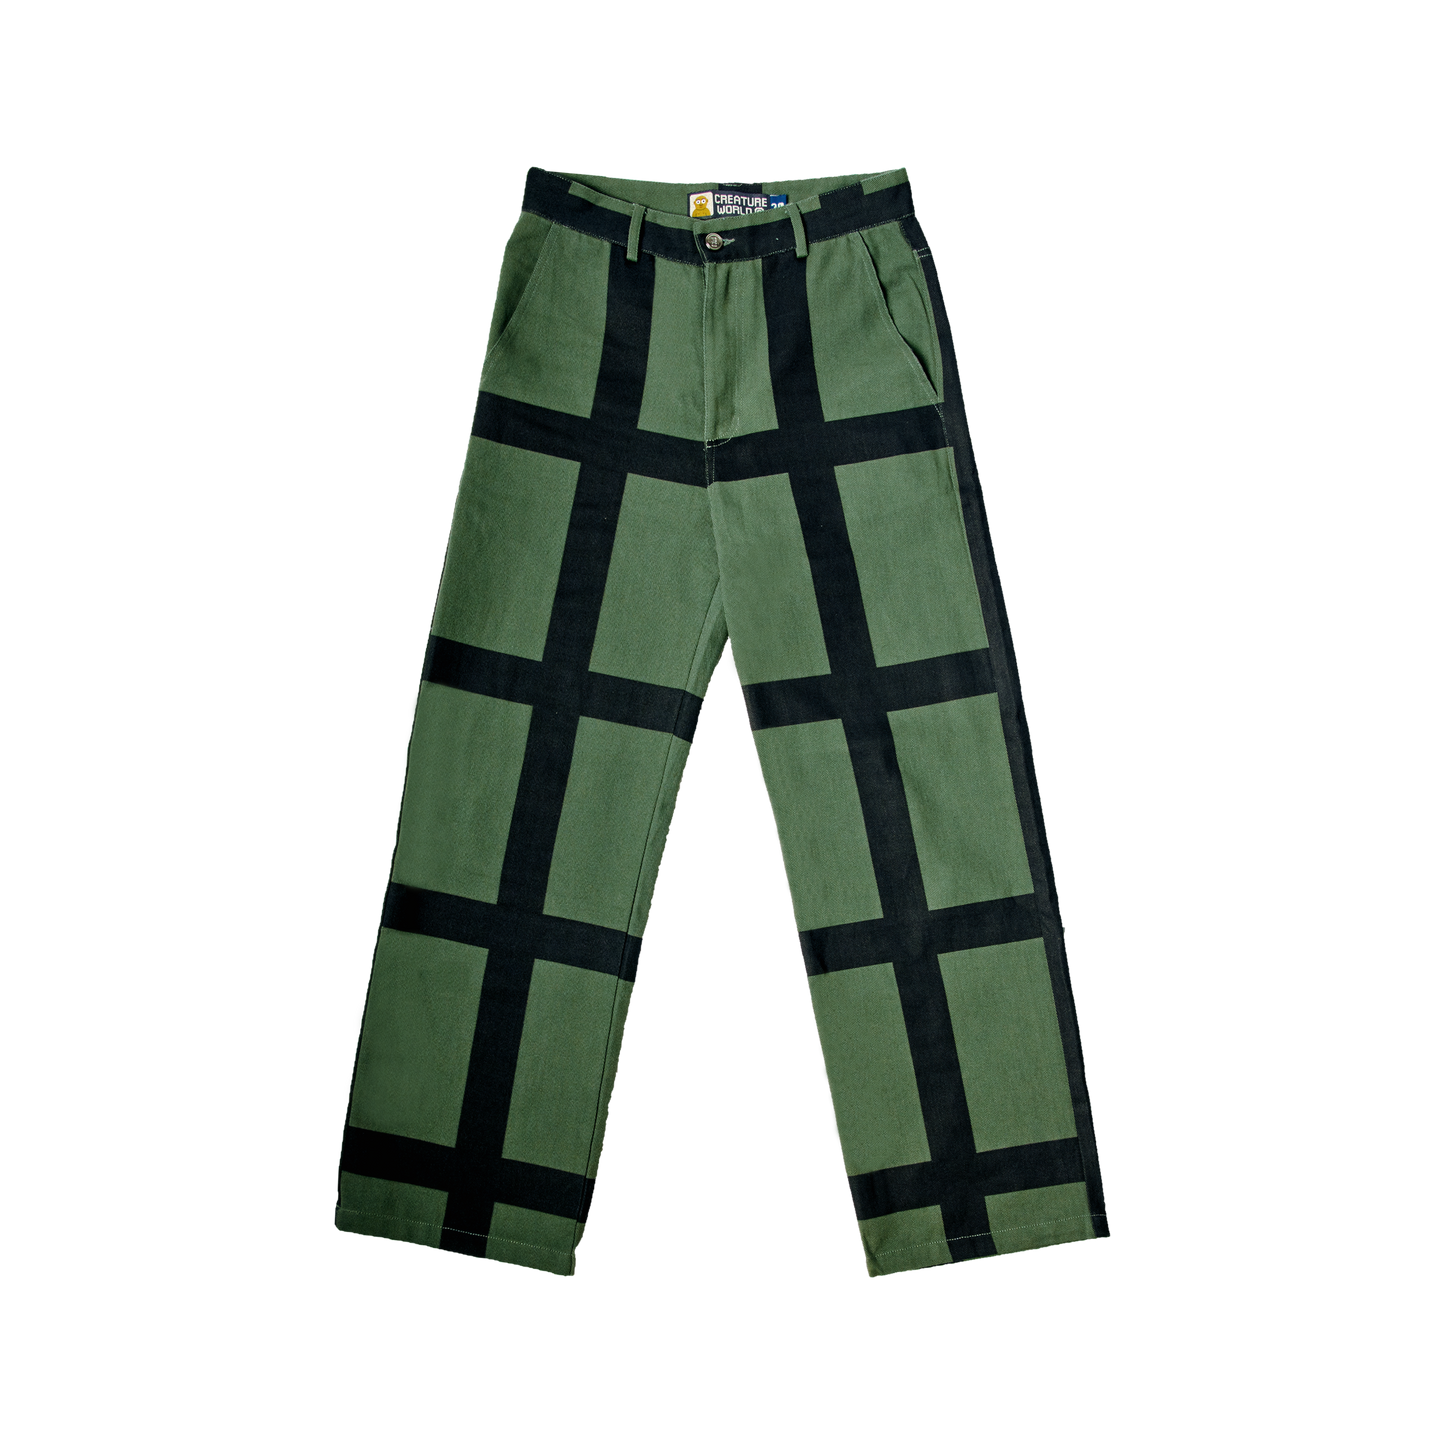 Grid Pants